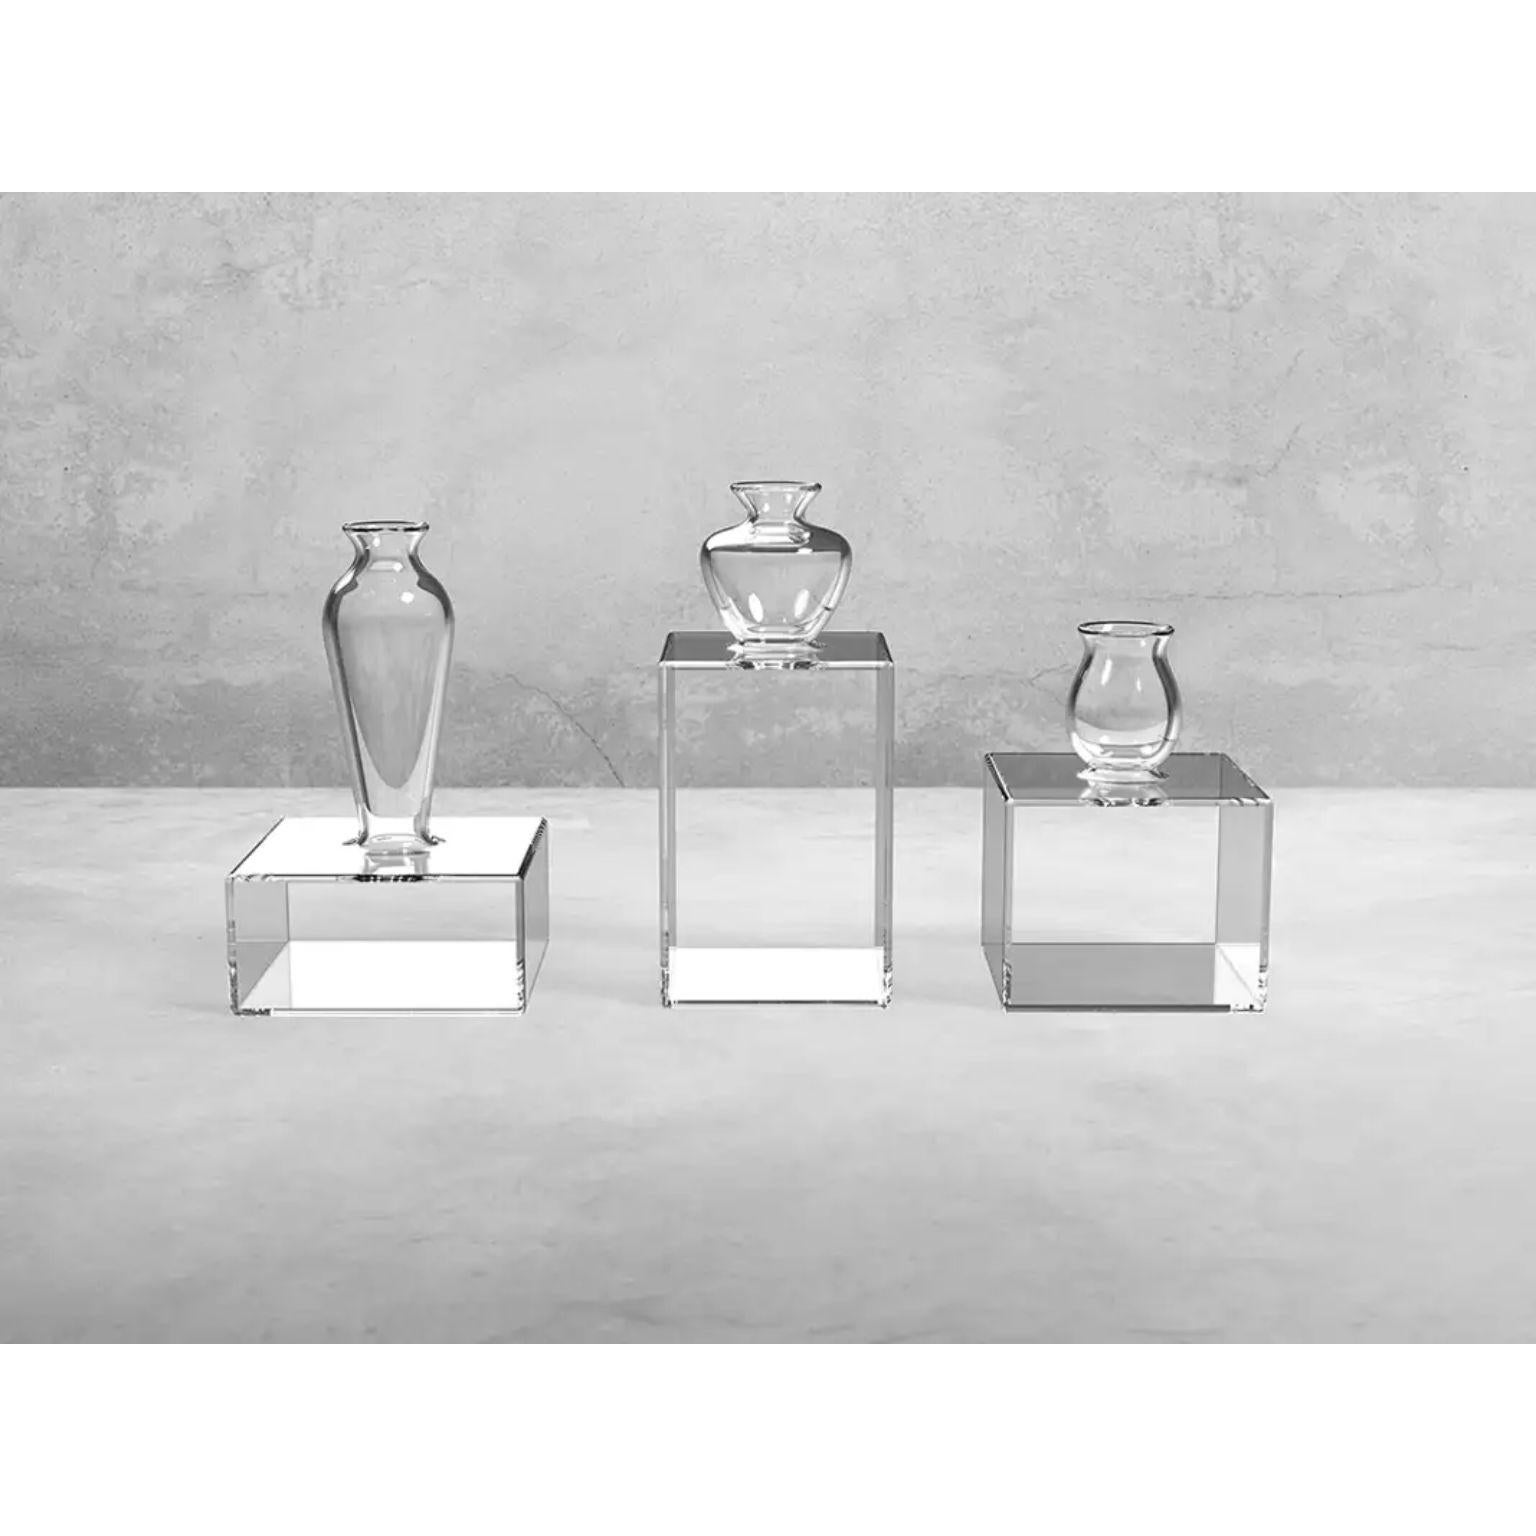 Set of 3 milo square transparent vases by Mason Editions.
Designed by Quaglio Simonelli.
Dimensions: Medium vase: D 6.4 x W 6.4 x H 8.8 cm.
Tall vase: D 5.6 x W 5.6 x H 12.5 cm.
Low vase: D 7.1 x W 7.1 x H 11.5 cm.
Materials: Pyrex borosilicate